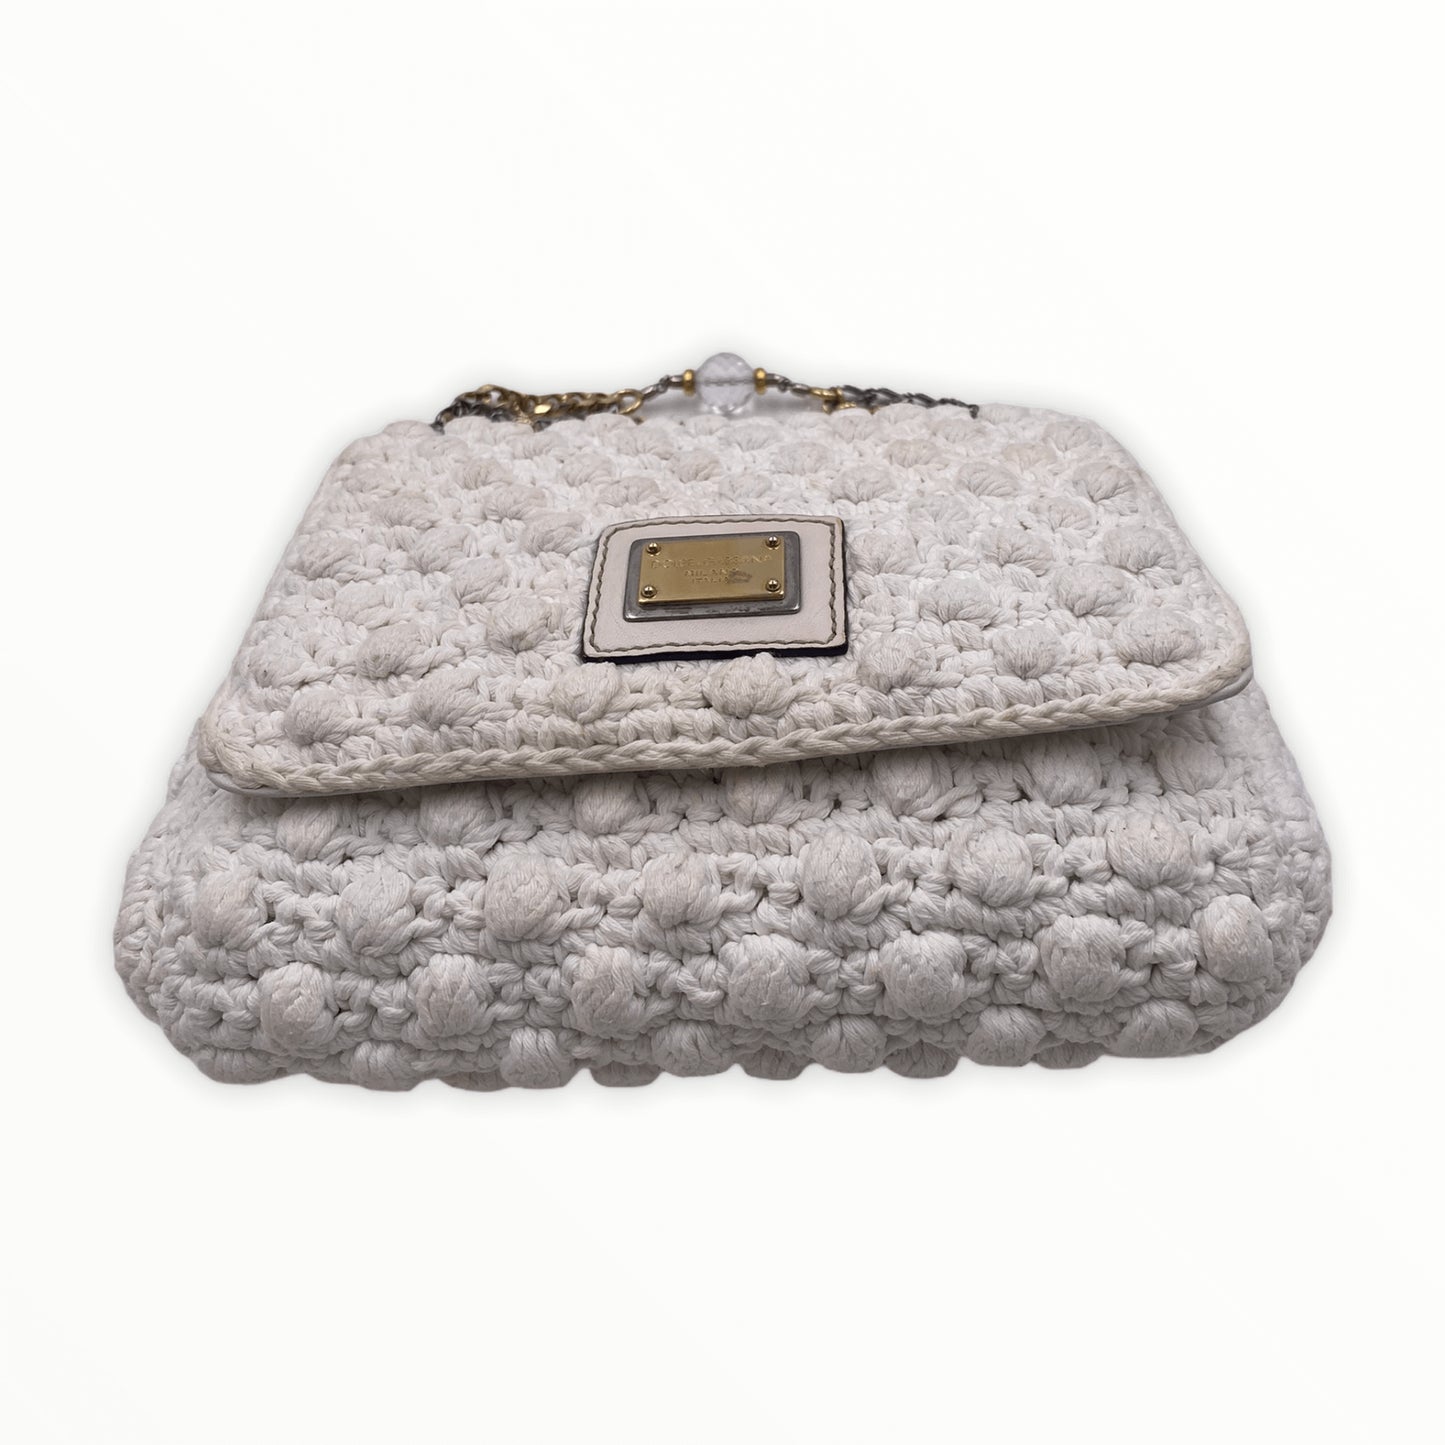 Dolce & Gabbana Miss Charles Crochet Handbag